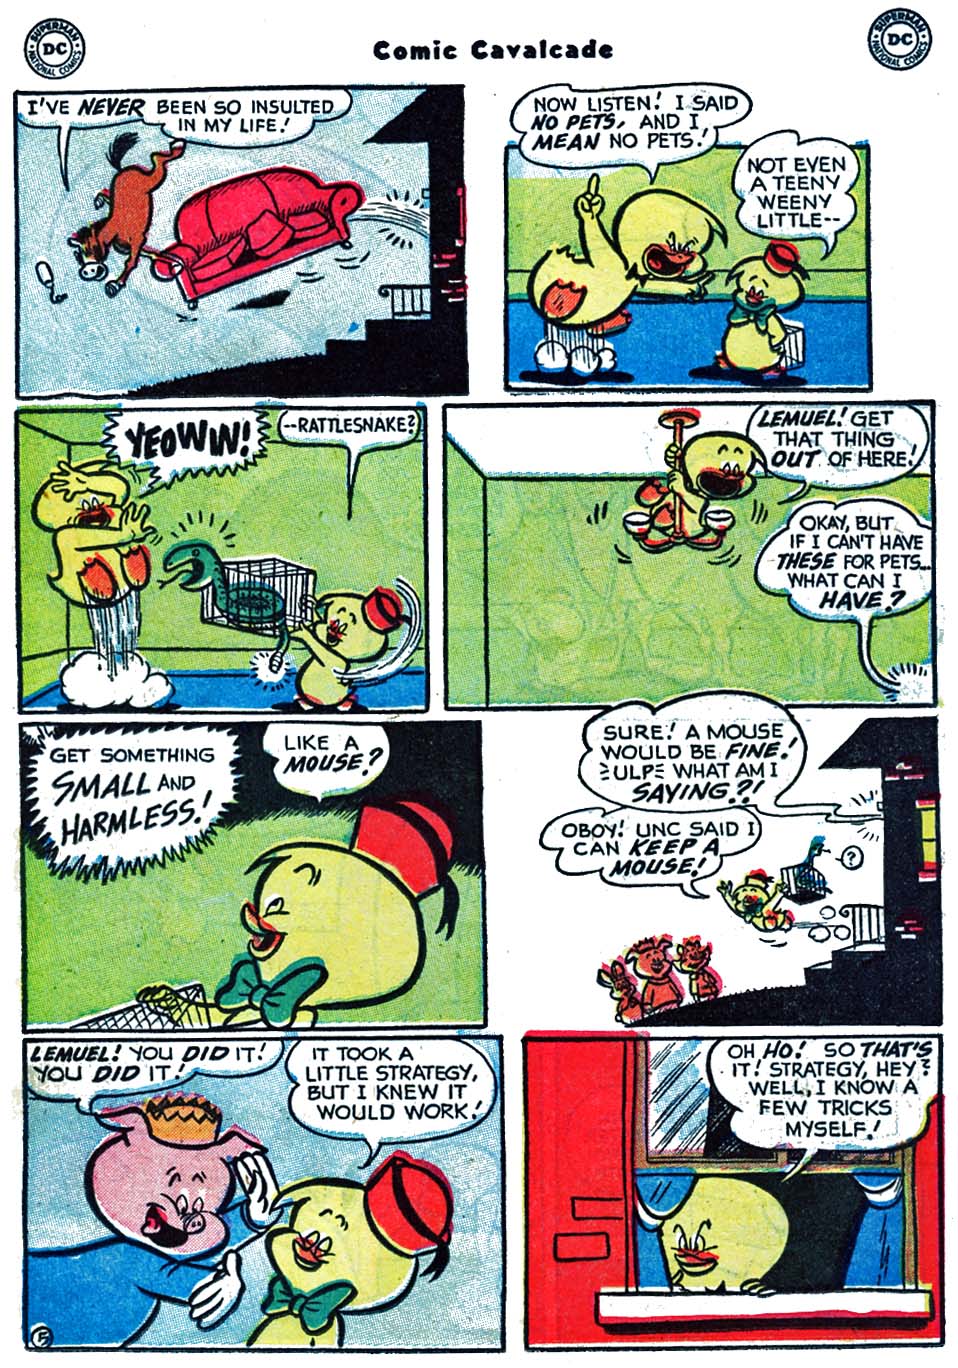 Comic Cavalcade issue 60 - Page 26